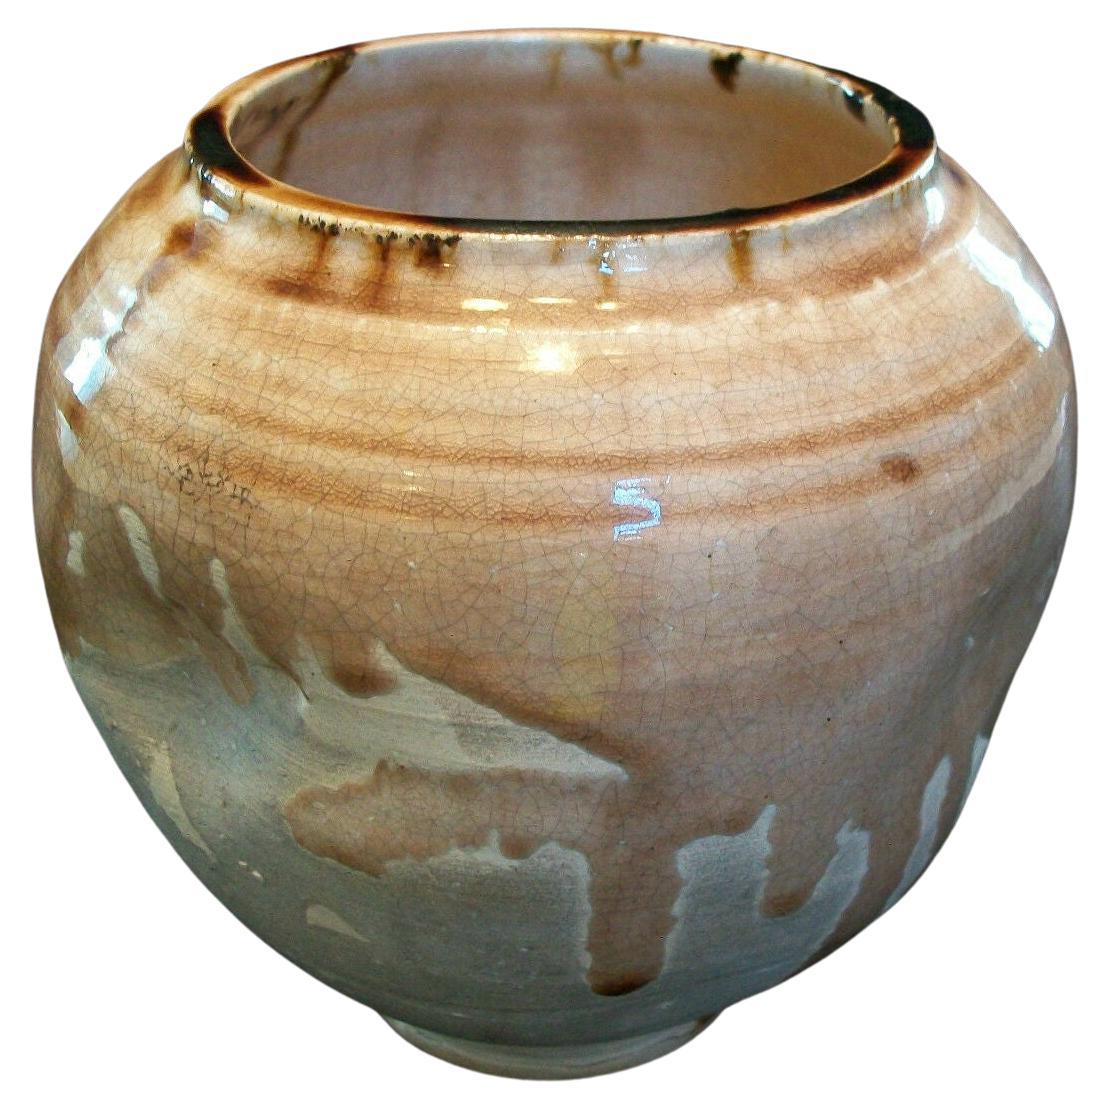 Vintage Glazed Ceramic Vase - Dimpled Sides - Unsigned - Late 20th Century